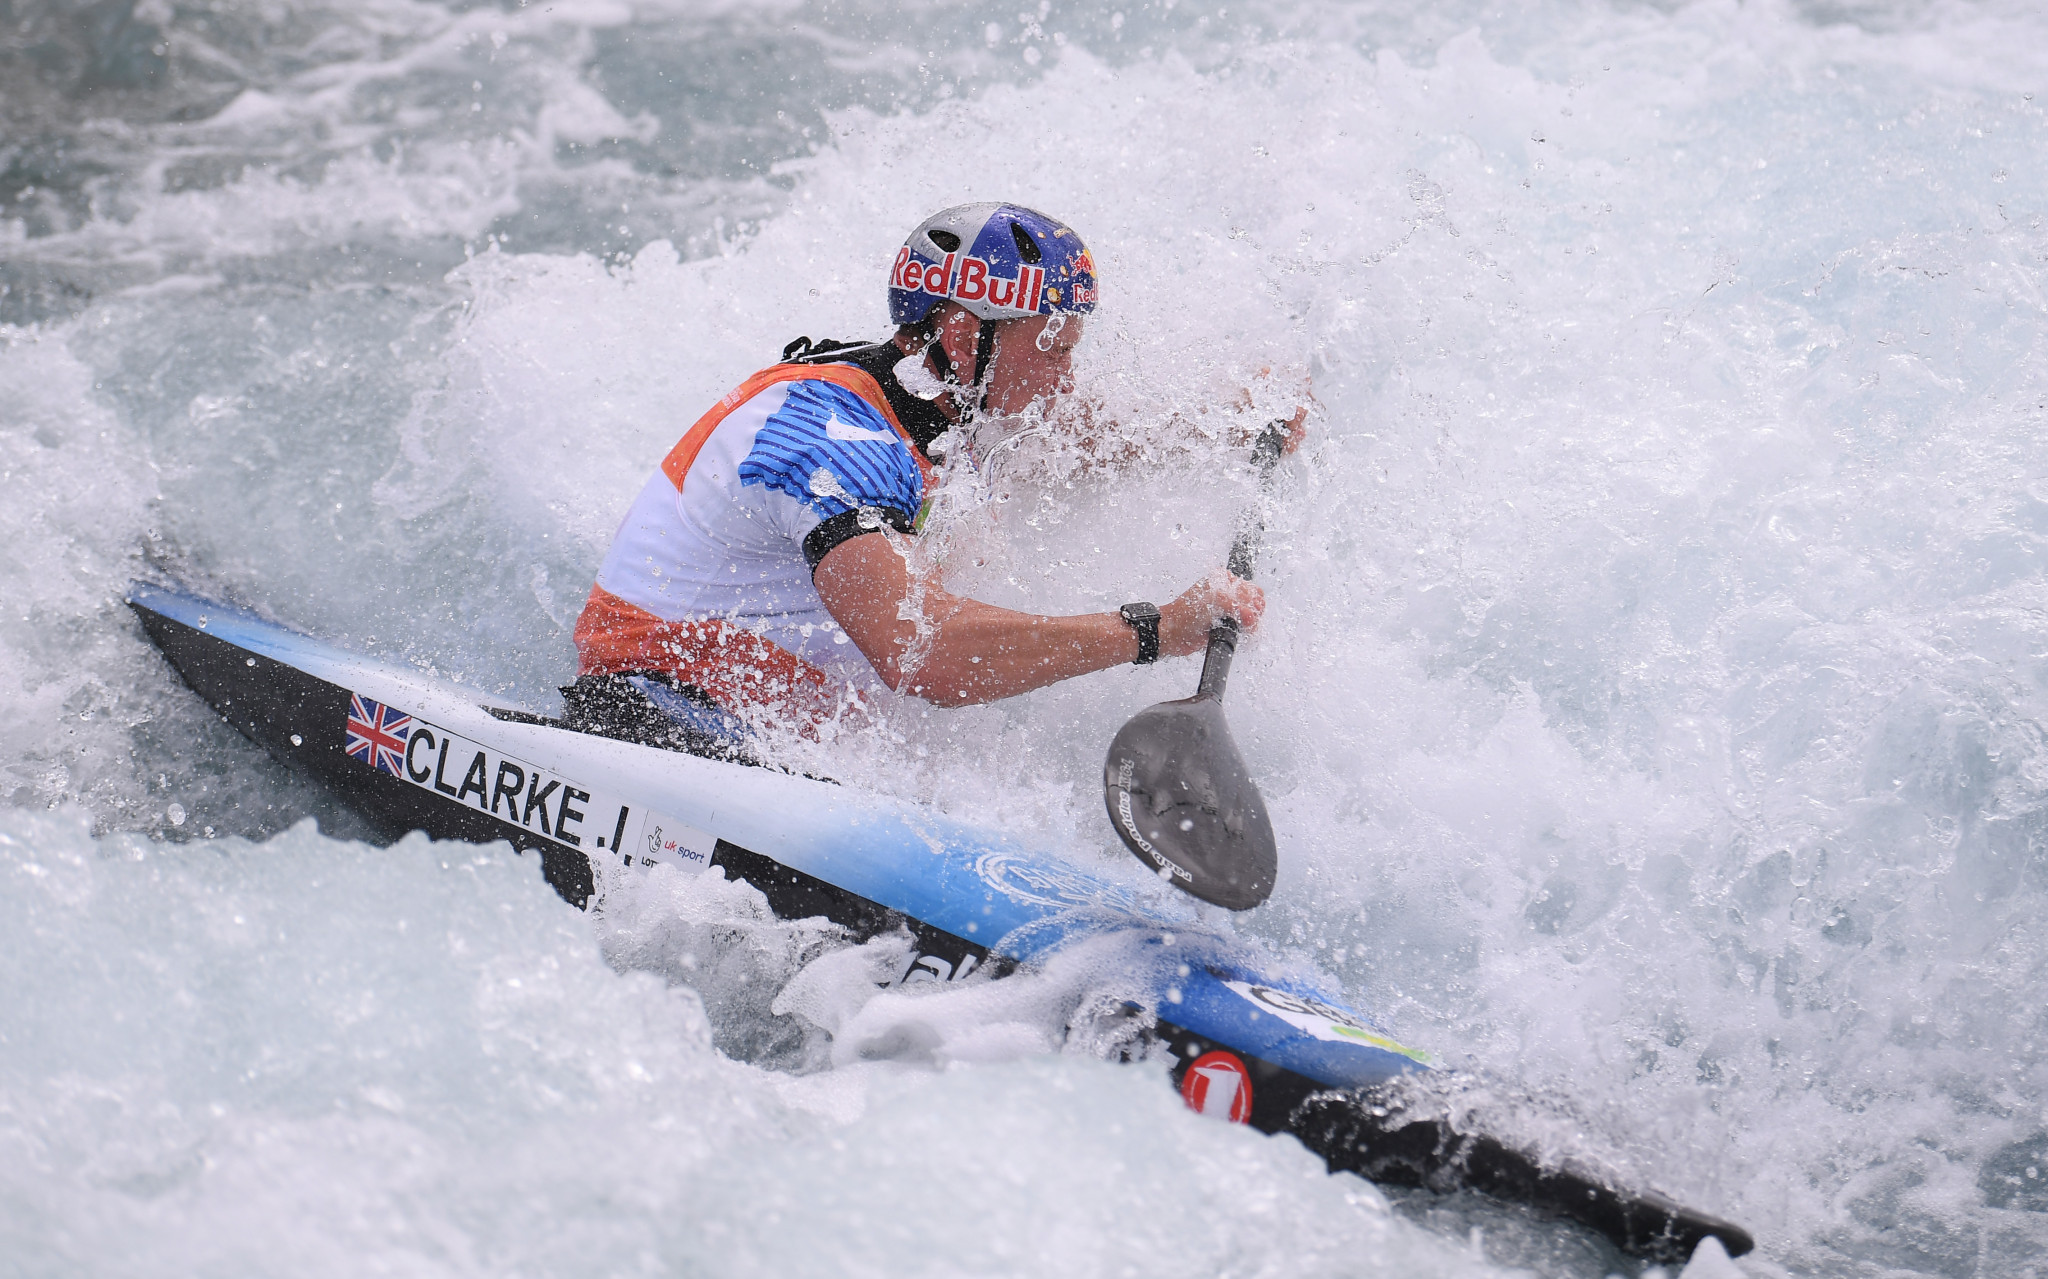 Clarke and Fox star as ICF Canoe Slalom World Cup opens in Ljubljana